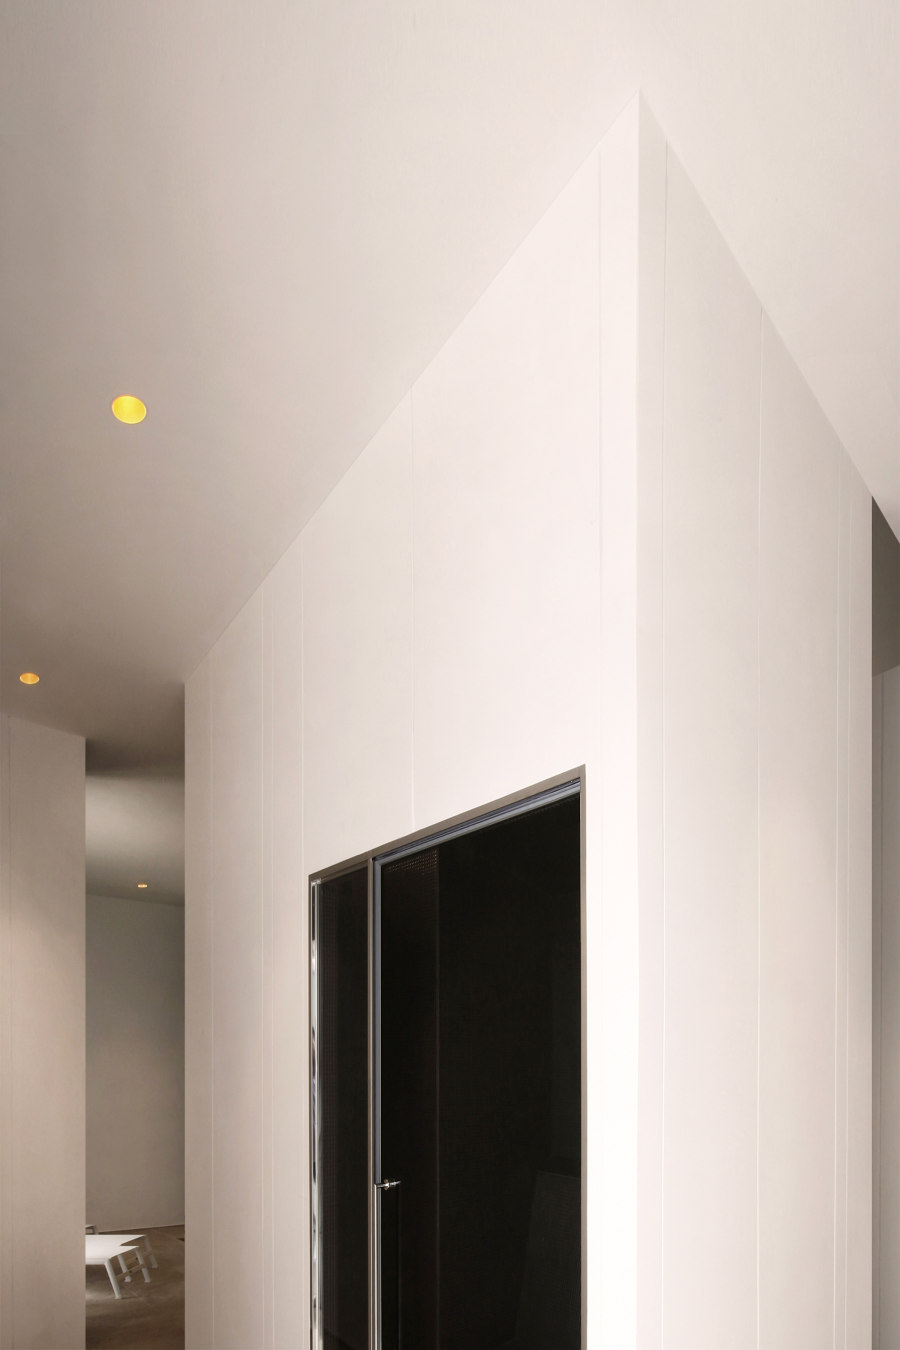 White Digger de Tomas Ghisellini Architects | Instalaciones Spa